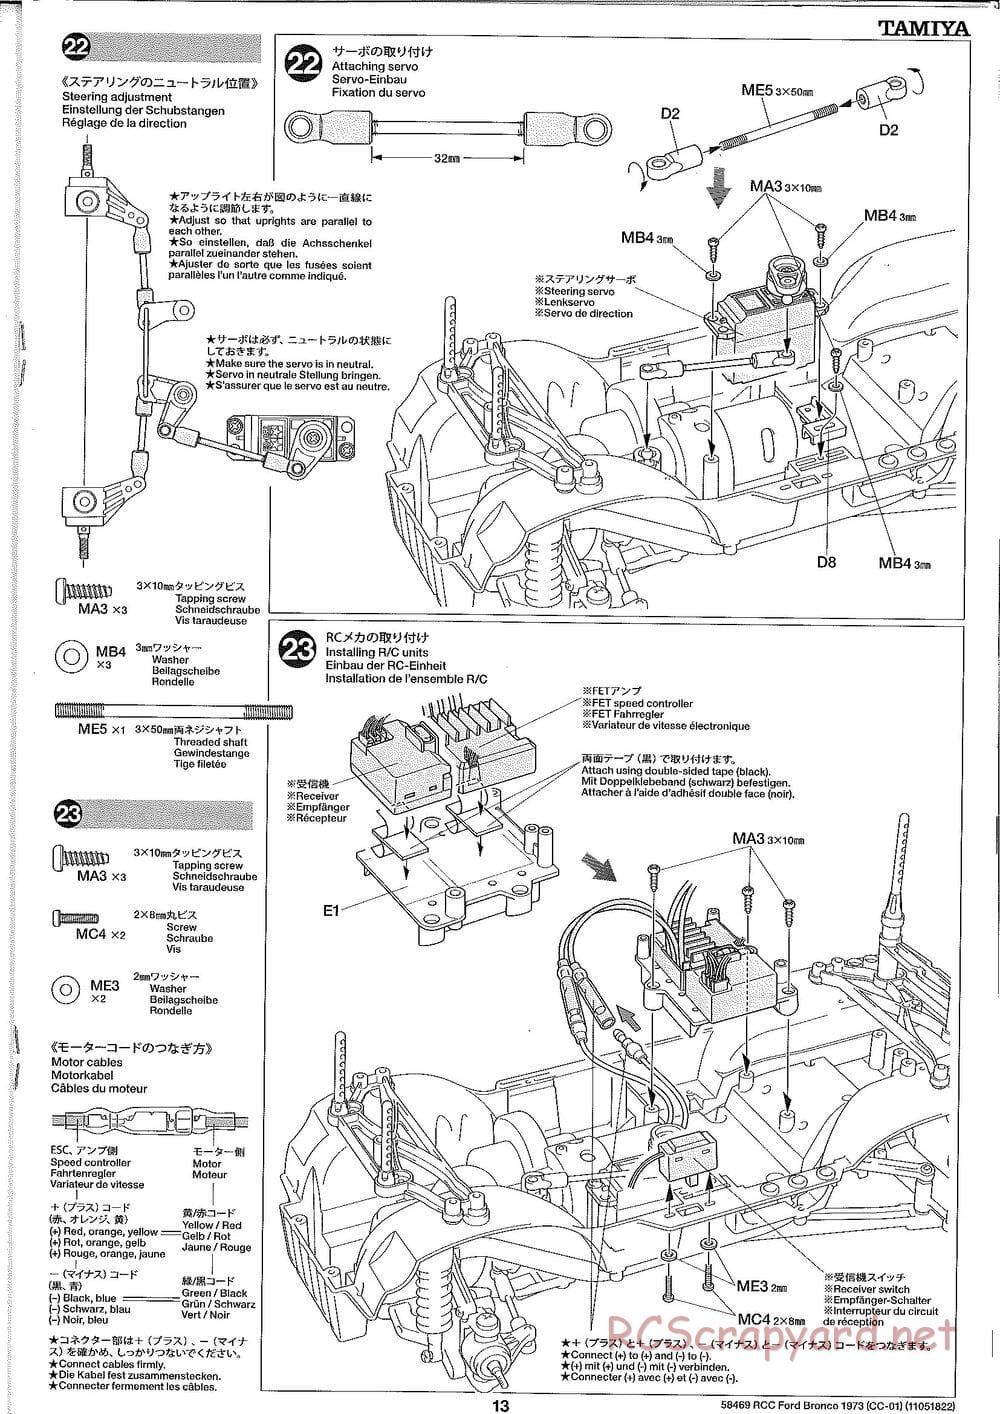 Tamiya - Ford Bronco 1973 - CC-01 Chassis - Manual - Page 13